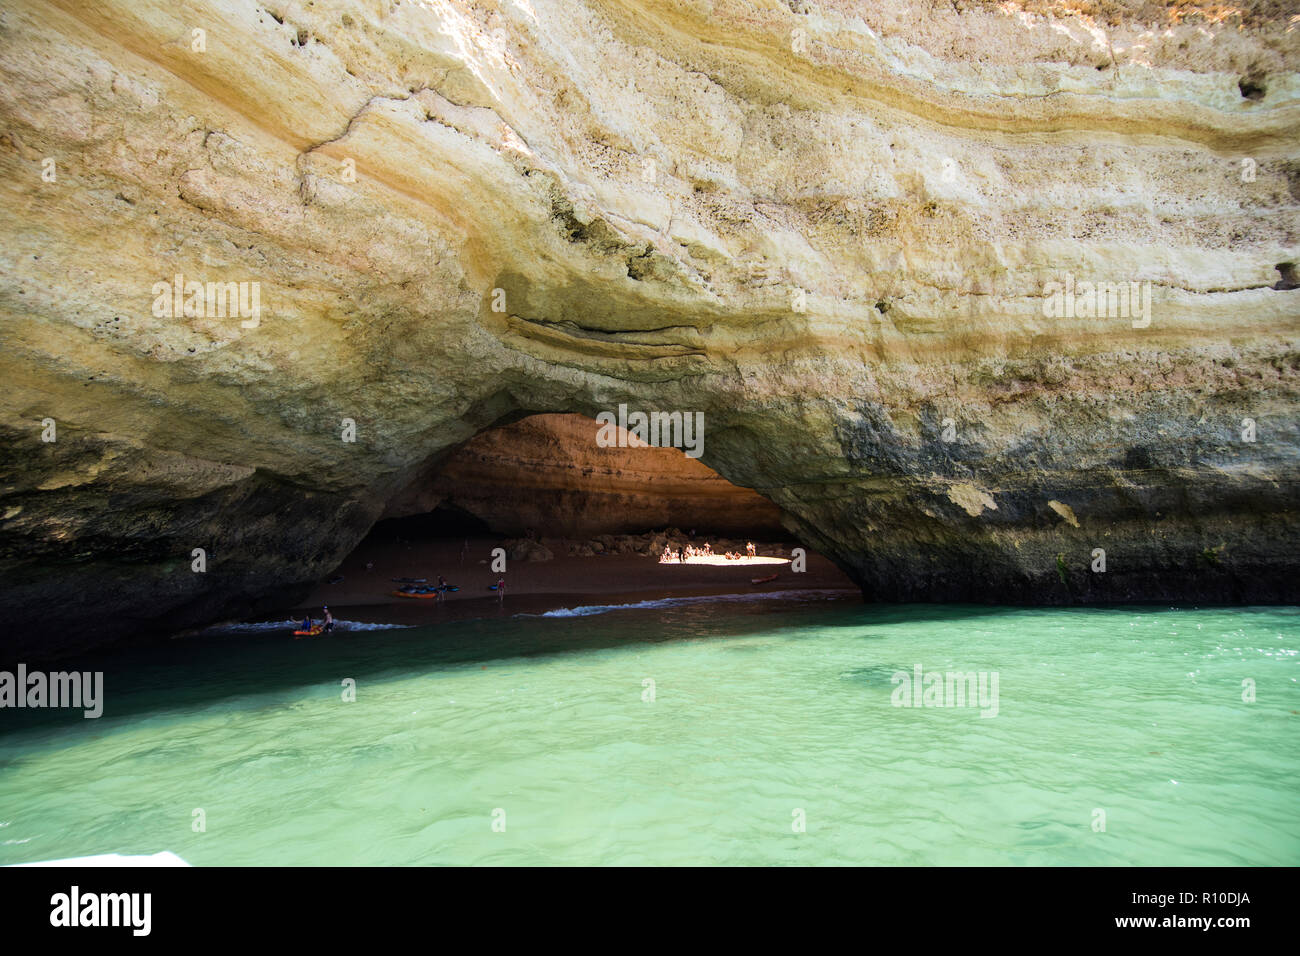 Benagil, Portugal - Juny, 2018: Benagil Cave Boat Tour inside Algar de Benagil, cave listed in the world's top 10 best caves. Algarve coast near Lagoa Stock Photo